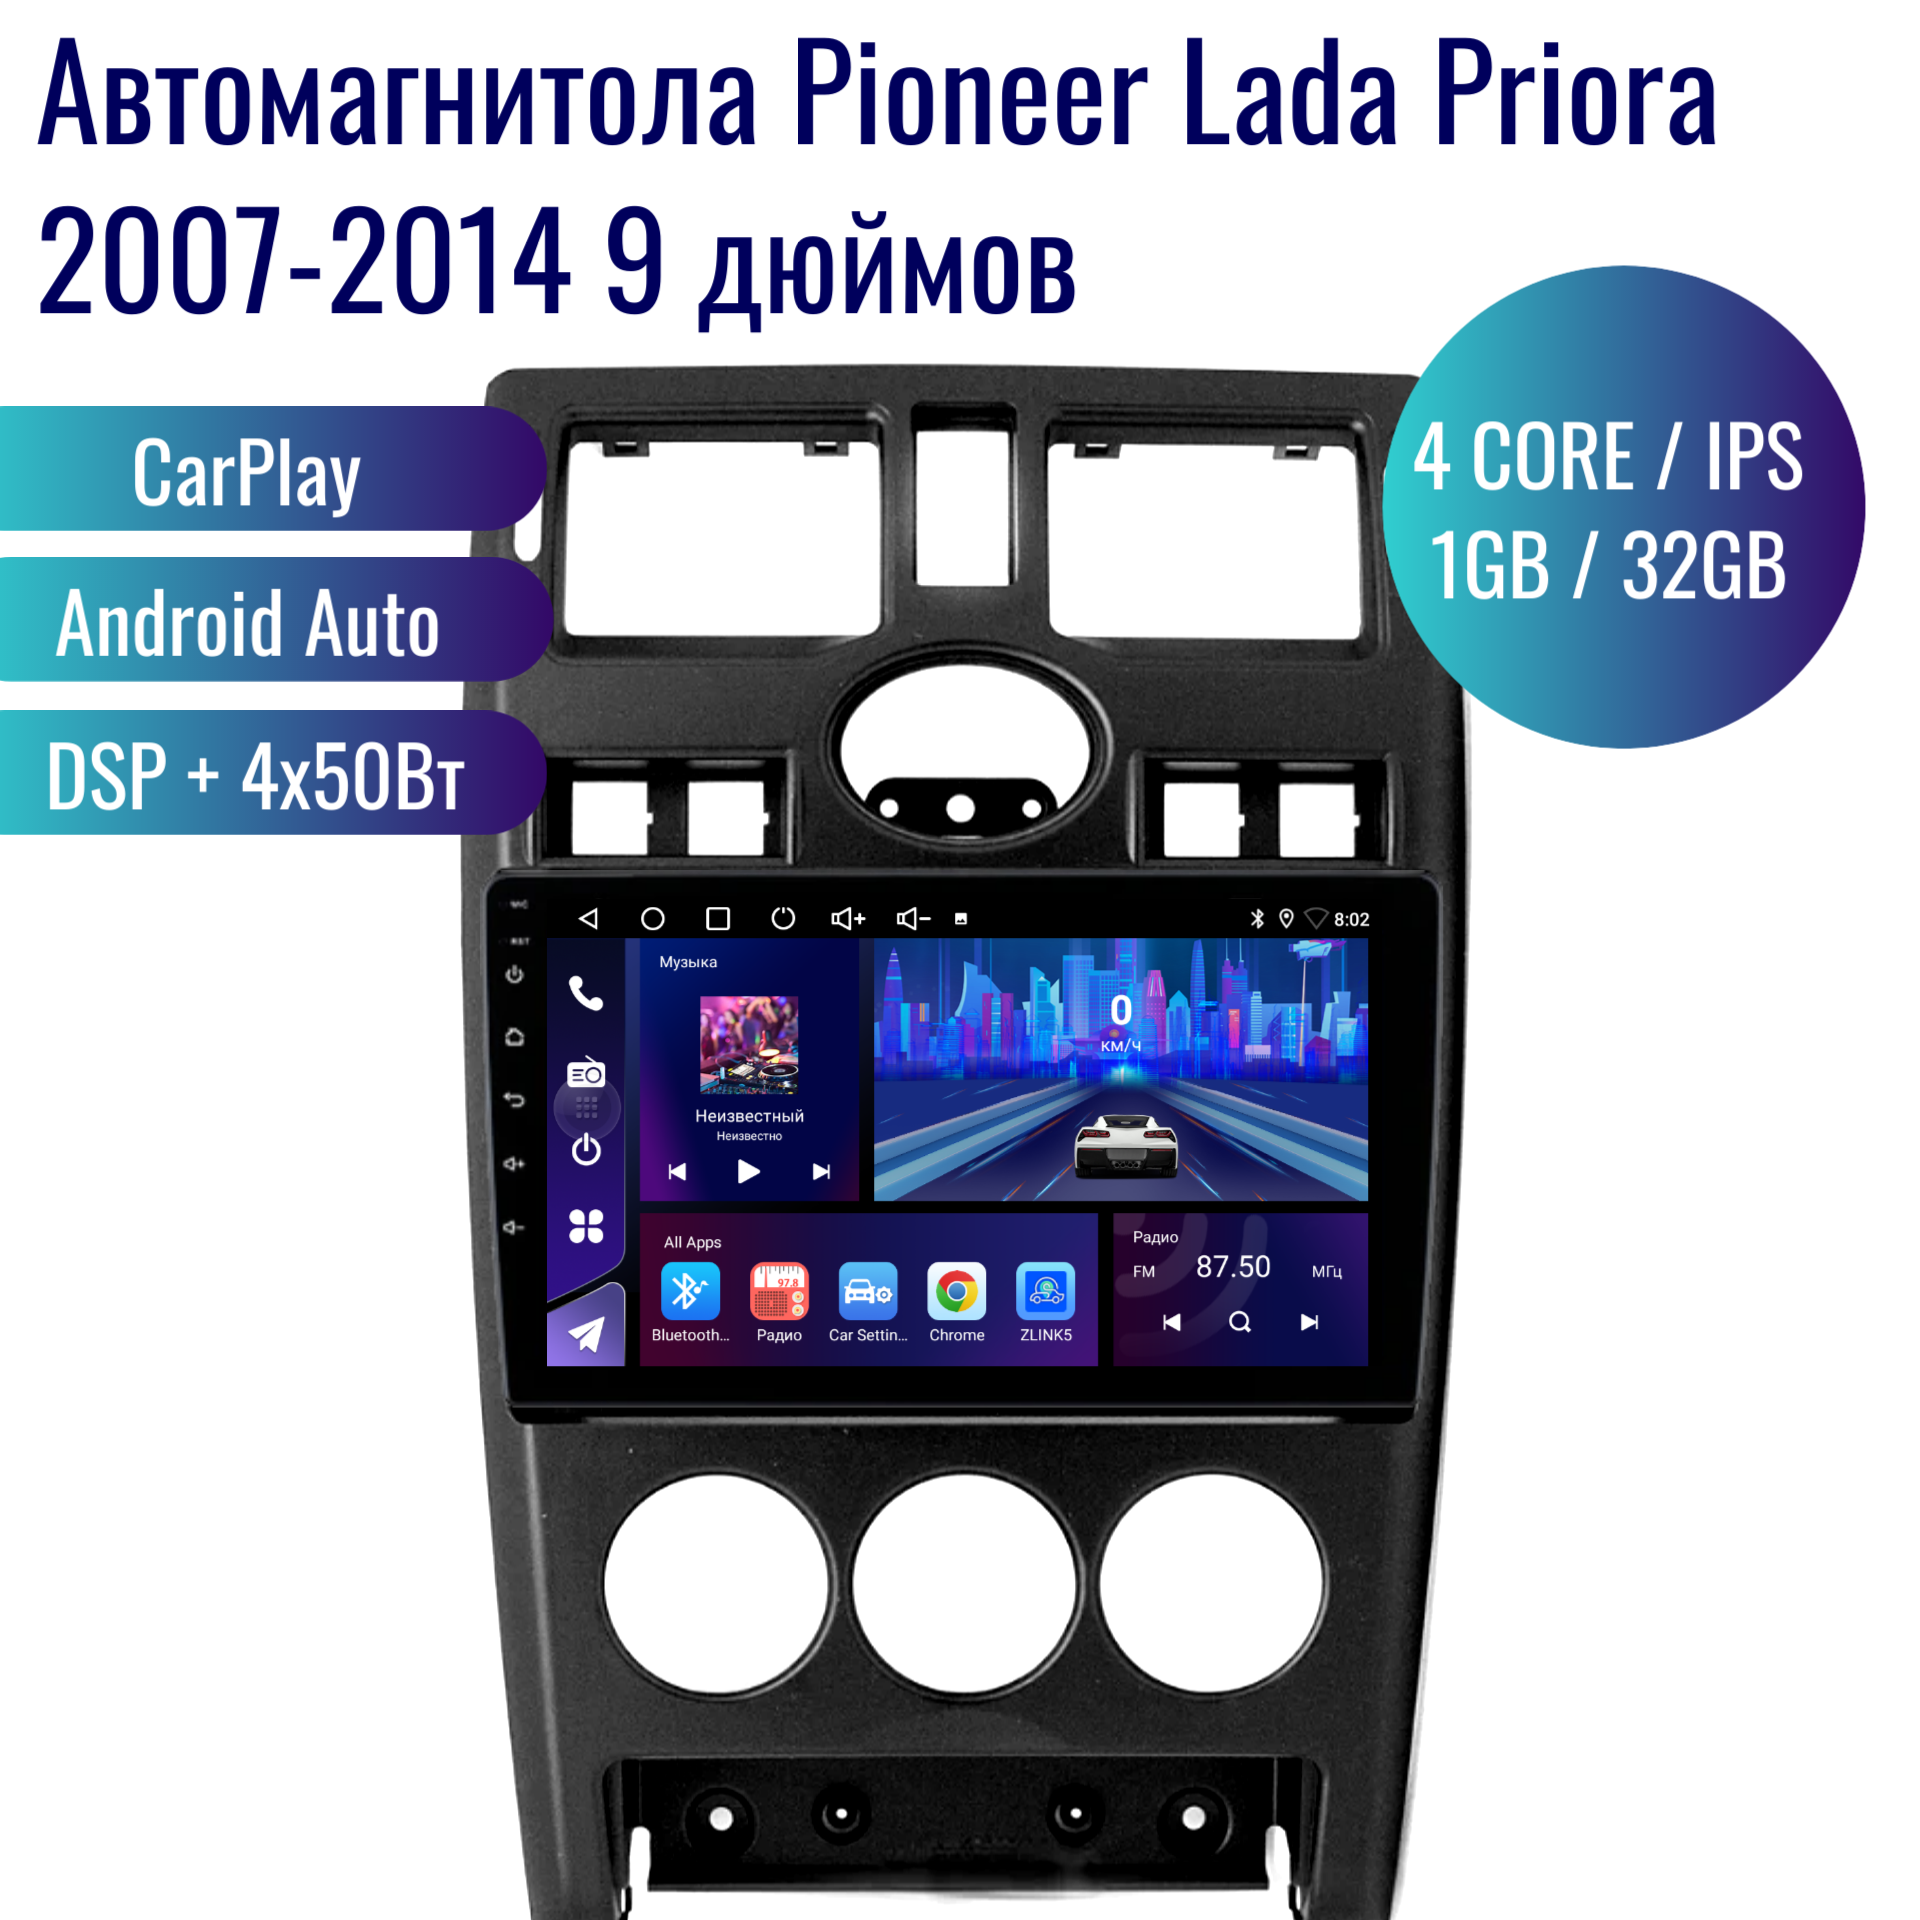 Автомагнитола Pioneer Android Lada Priora 2007-2014 / 4 ядер 1Gb+32Gb / 9 дюймов / GPS / Bluetooth / Wi-Fi / штатная магнитола / 2din / навигатор /